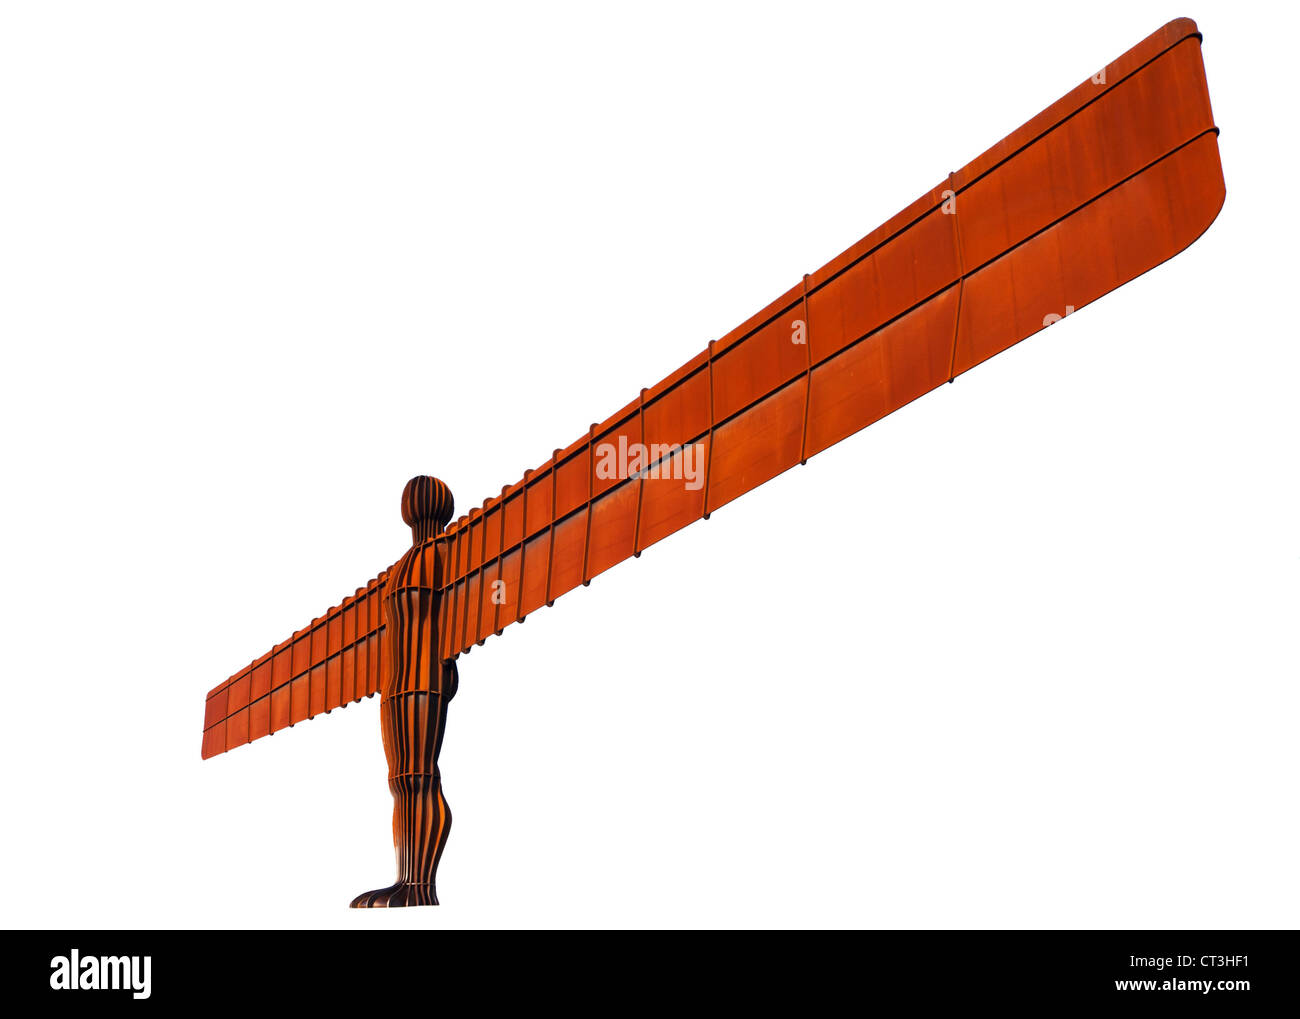 Ange de la Sculpture du Nord par Antony Gormley Gateshead Newcastle-upon-Tyne en Angleterre go uk eu Europe Banque D'Images